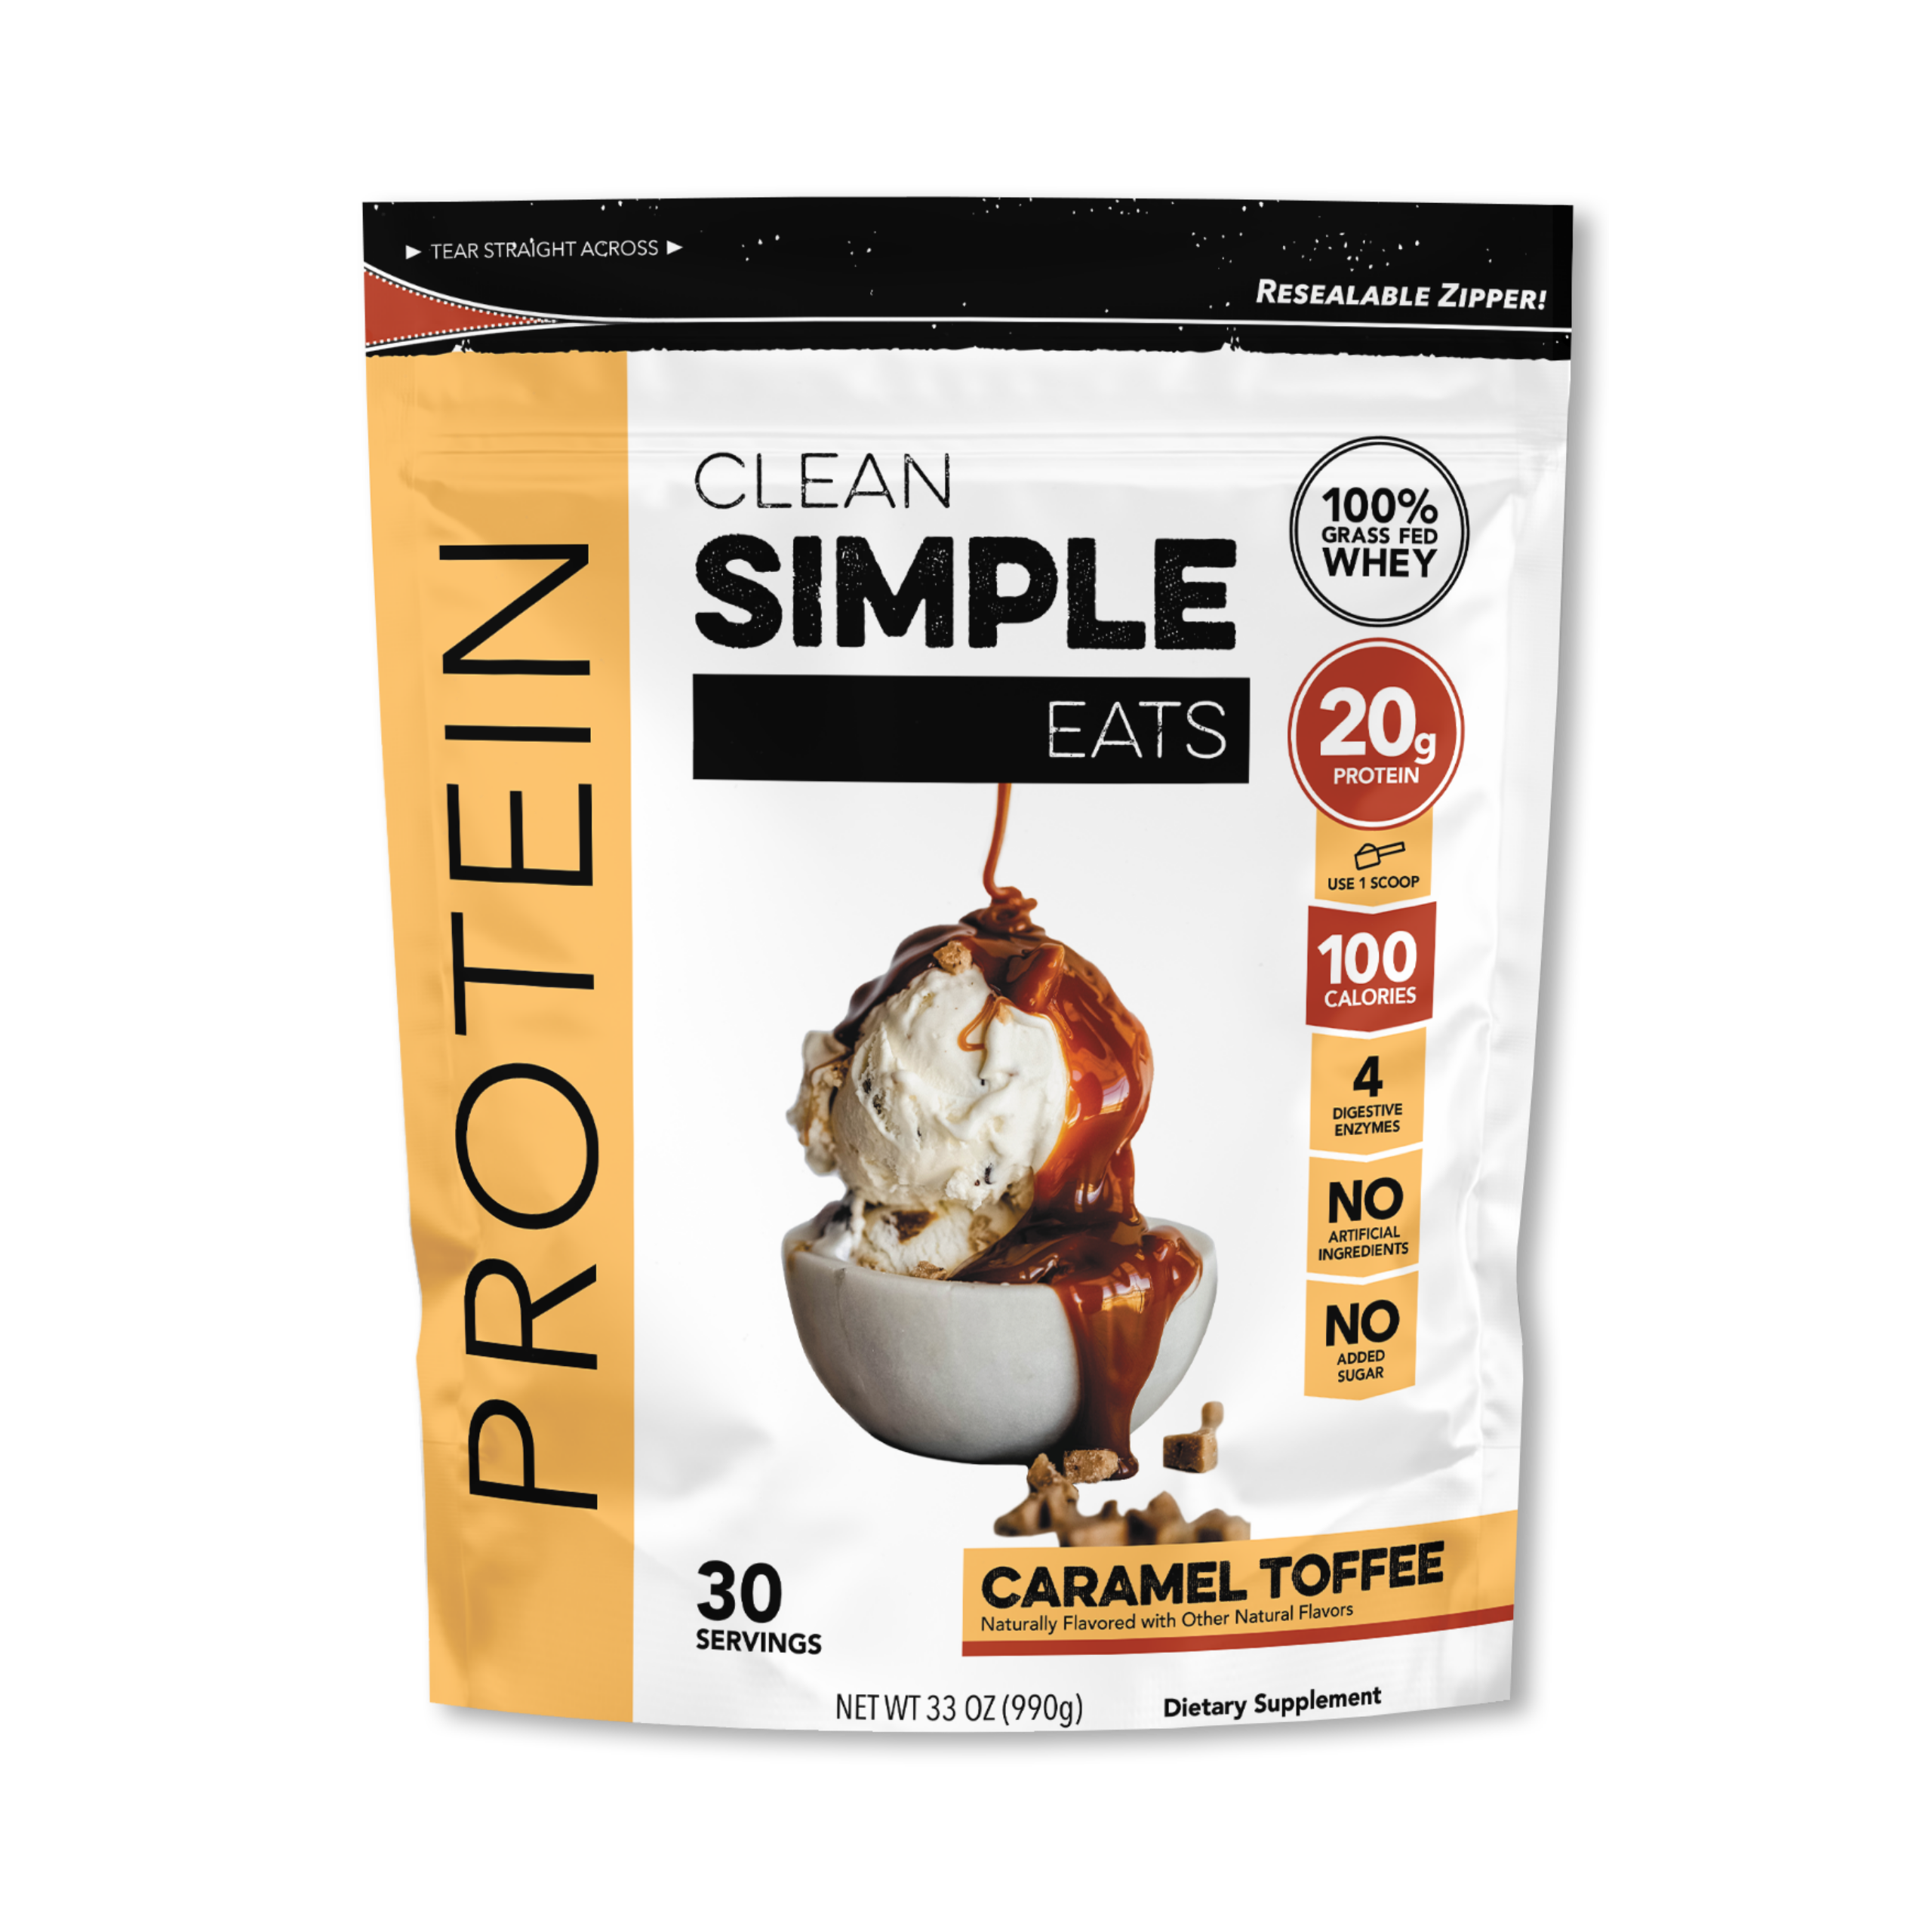 Protein Powder: Caramel Toffee (30 Serving Bag)